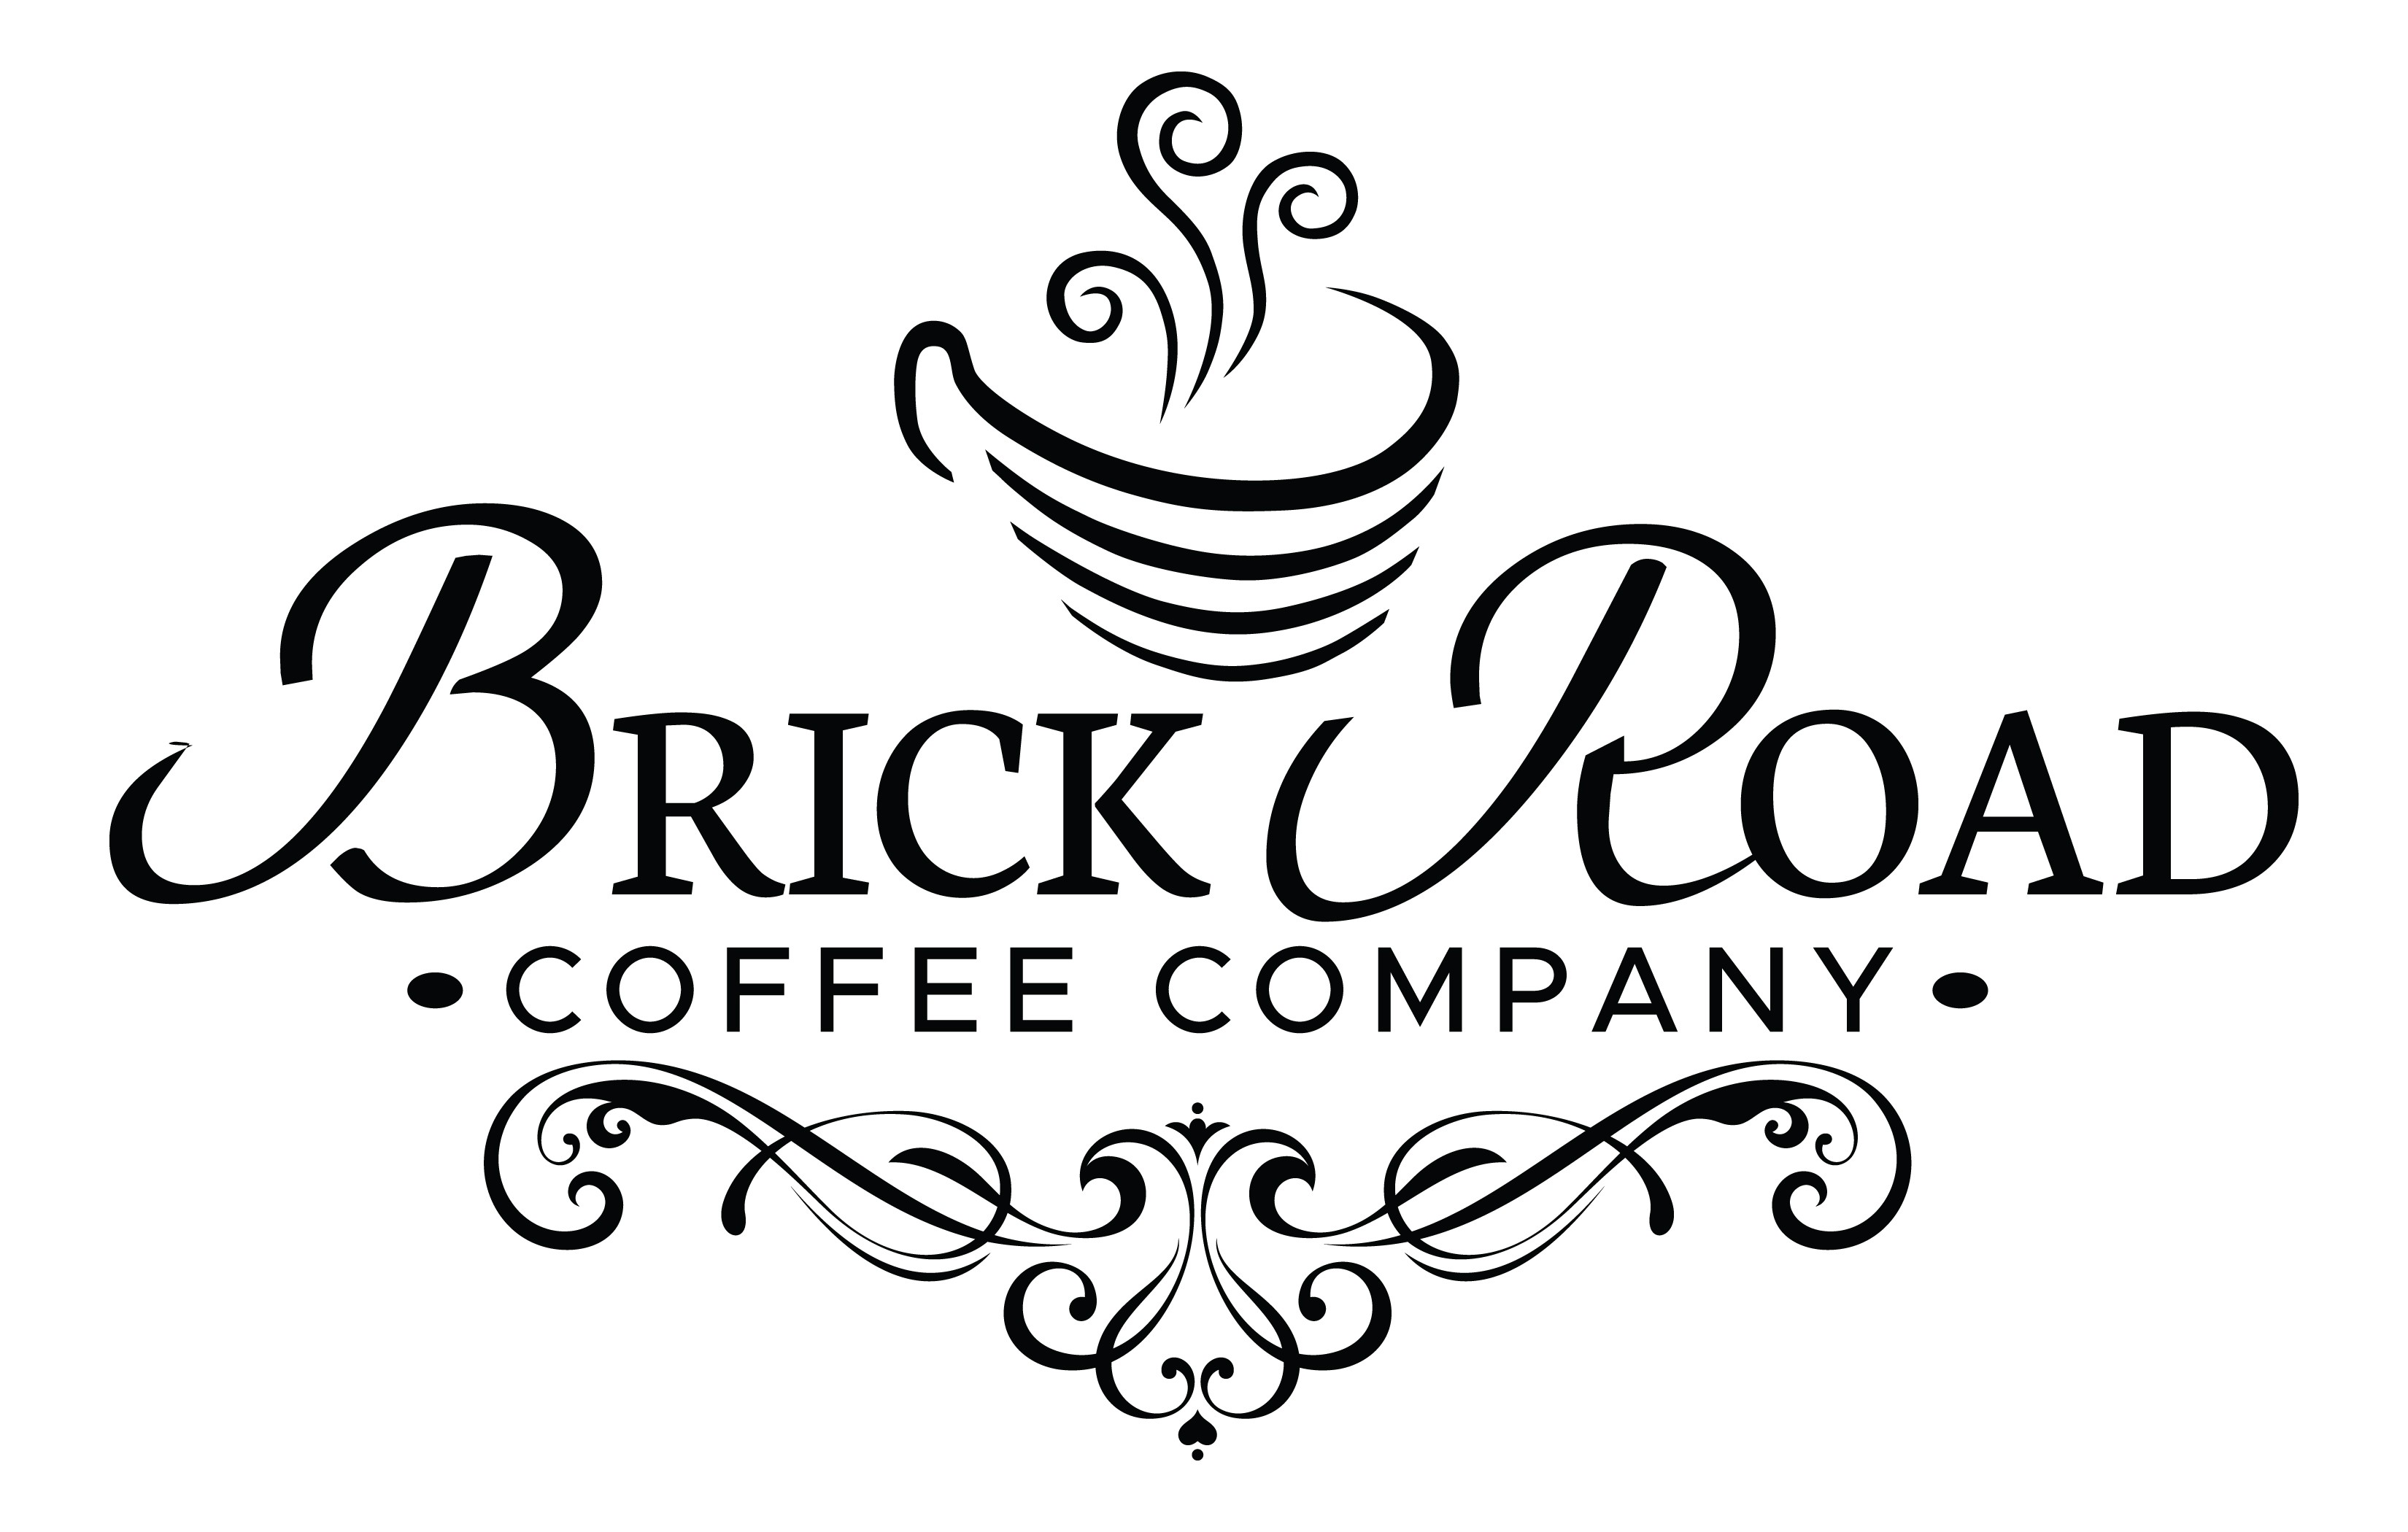 Brick Road Coffee Company